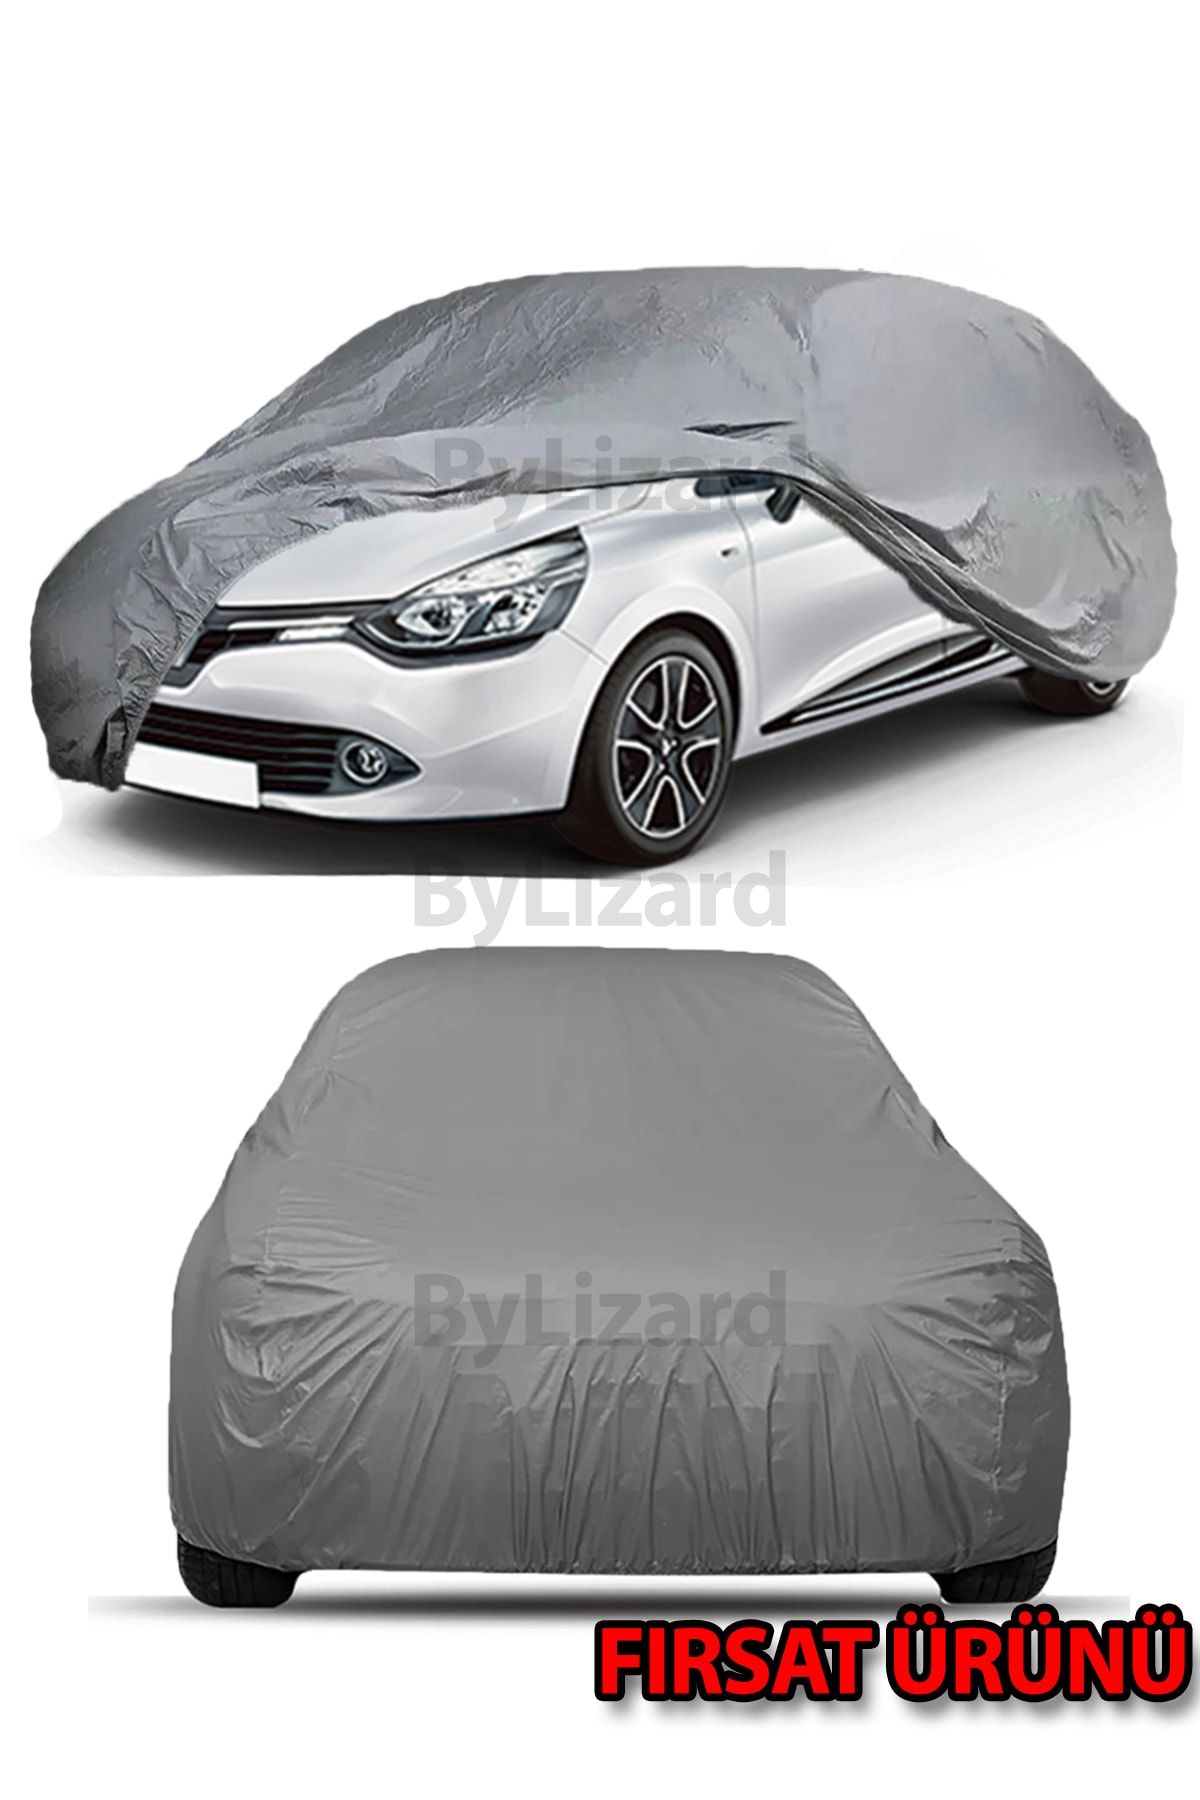 ByLizard Renault Clio Hatchback (hb) Uyumlu Lüks Kalite Oto Araba Brandası - Örtüsü